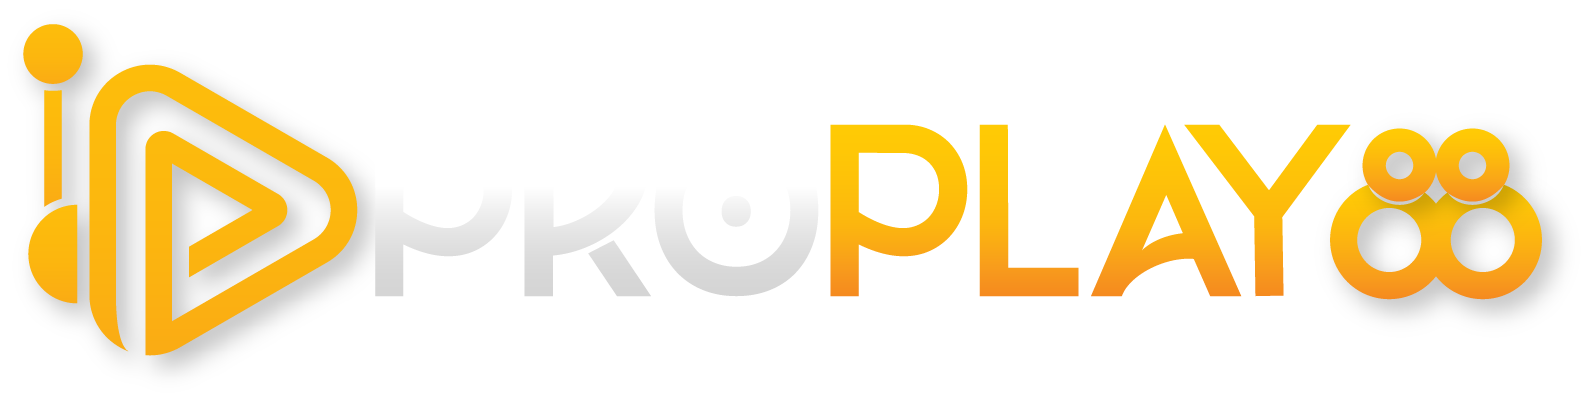 Logo Proplay88